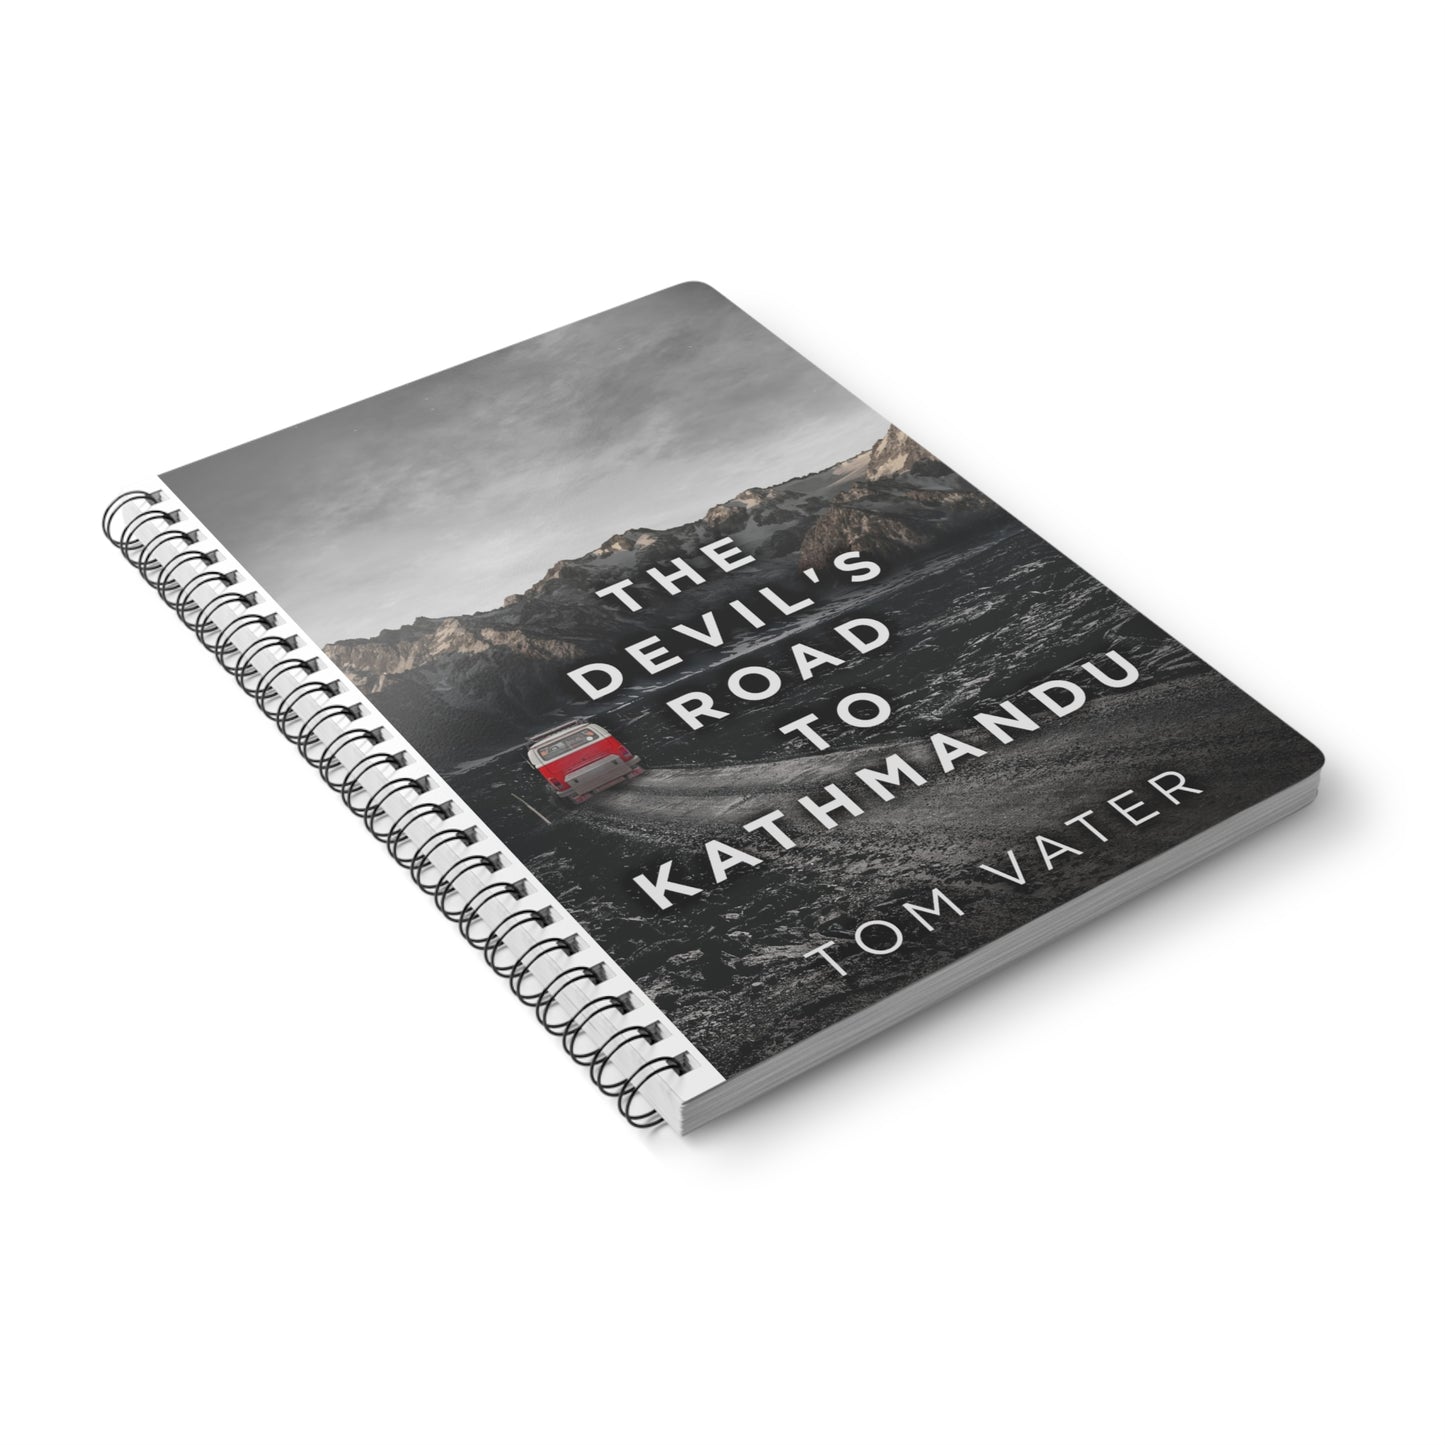 The Devil's Road To Kathmandu - A5 Wirebound Notebook